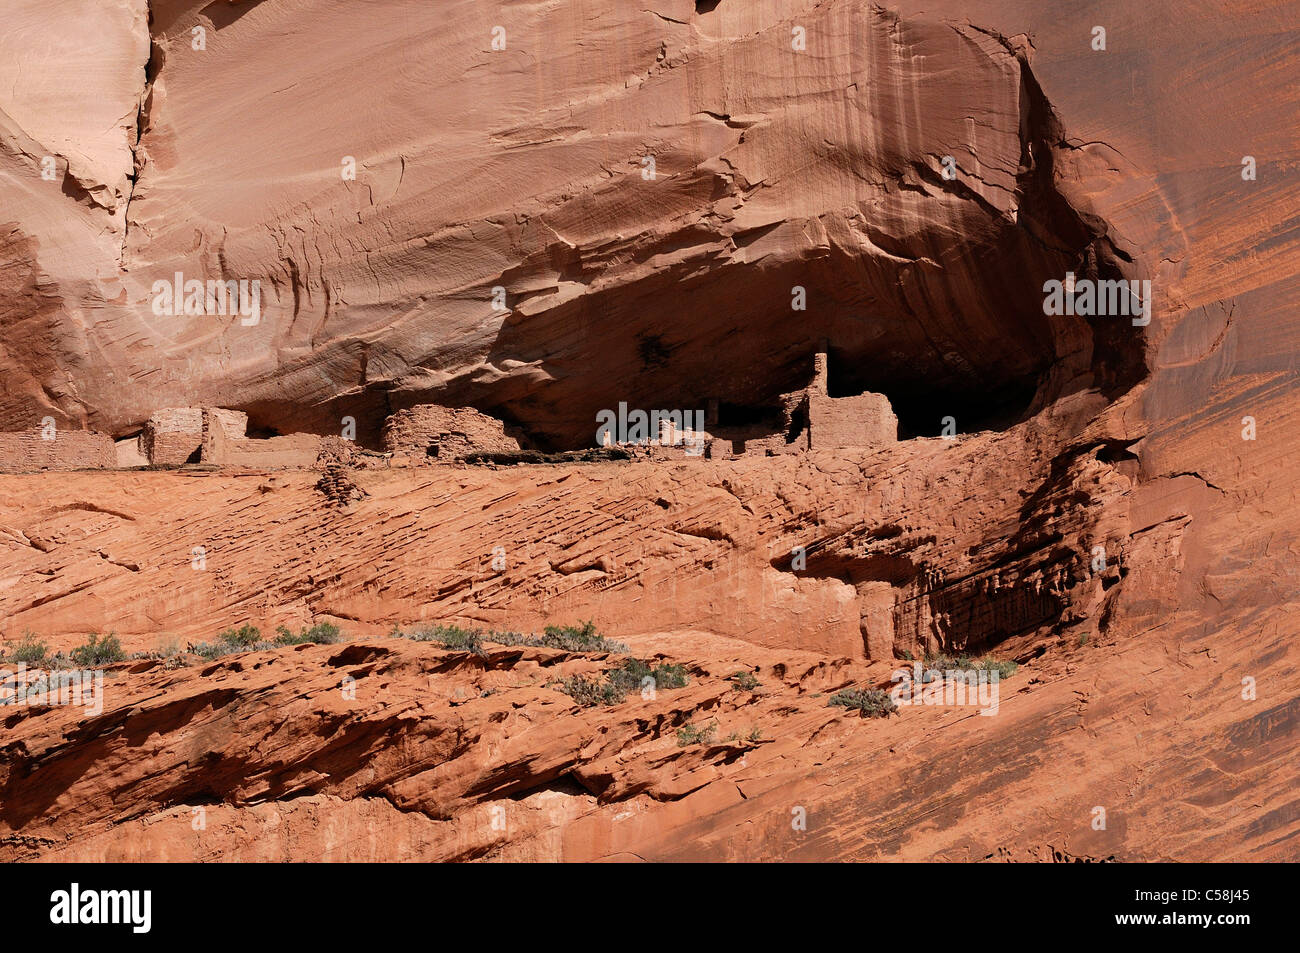 Anasazi Indianer, Ruinen, North Canyon, Canyon del Muerto, Canyon de Chelly, Nationaldenkmal, Arizona, USA, Vereinigte Staaten, amerik. Stockfoto